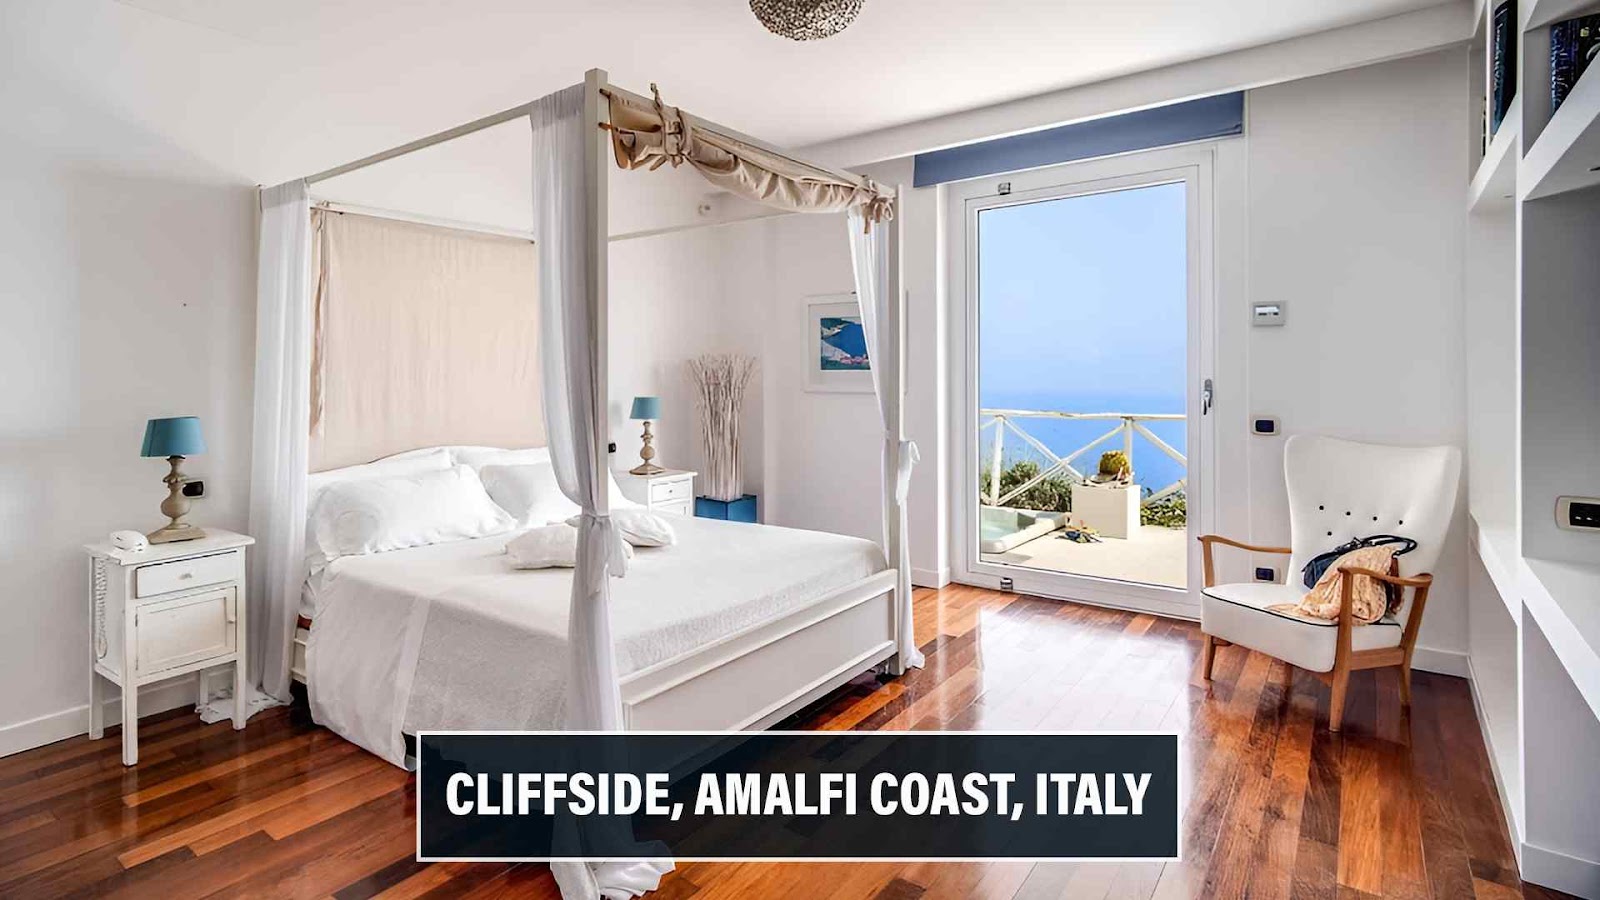 Cliffside, Amalfi Coast, Italy: